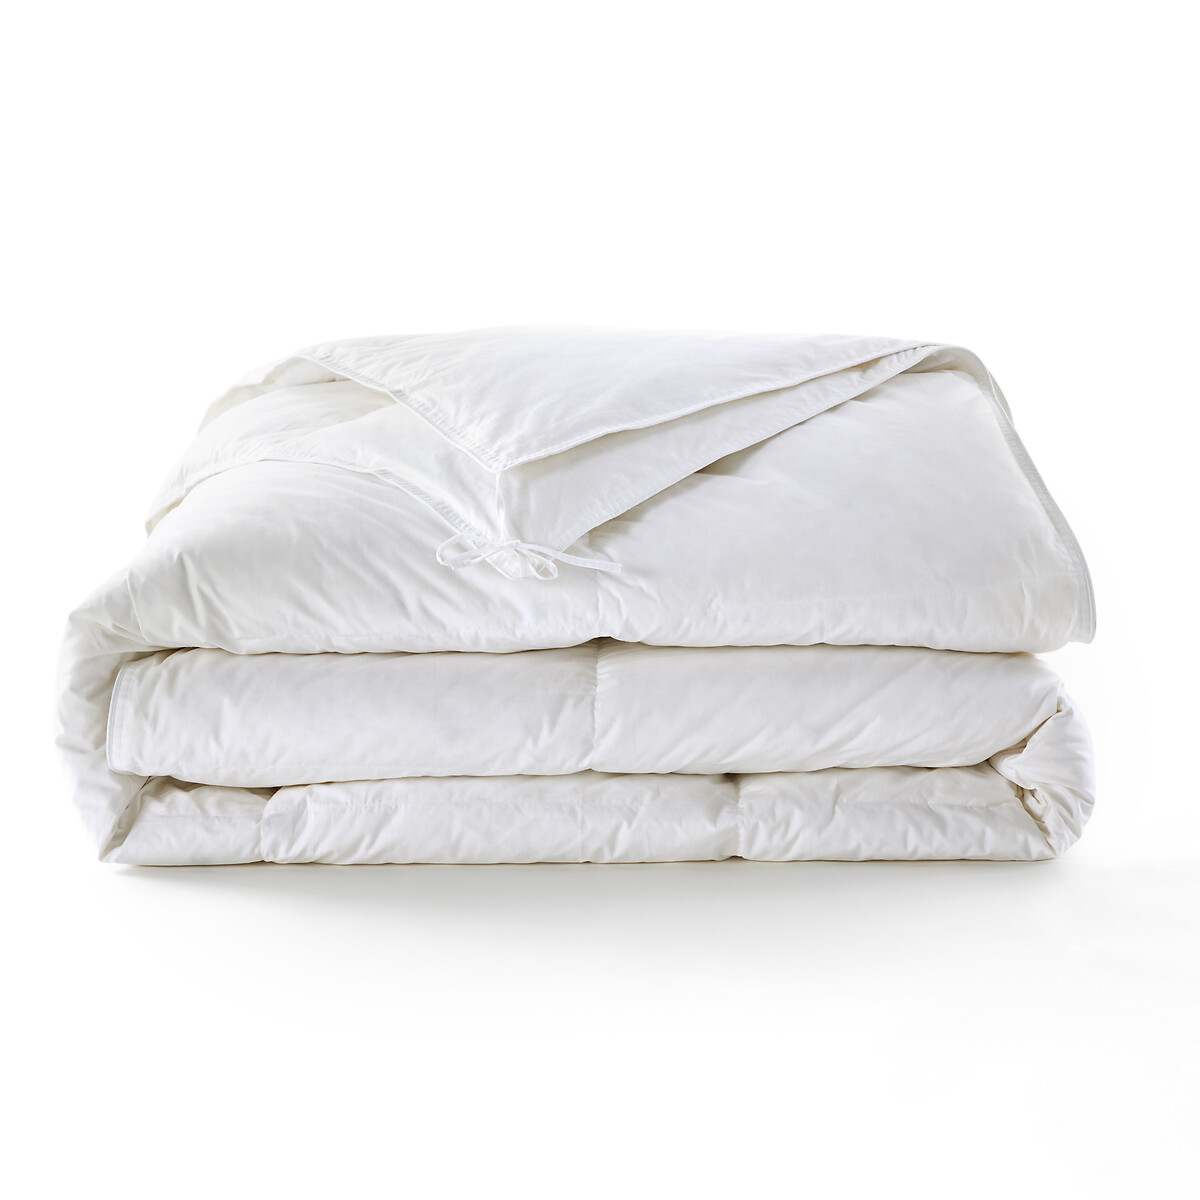 Одеяло LA REDOUTE INTERIEURS Одеяло 4 сезона натуральное 200 x 200 см белый, размер 200 x 200 см - фото 2